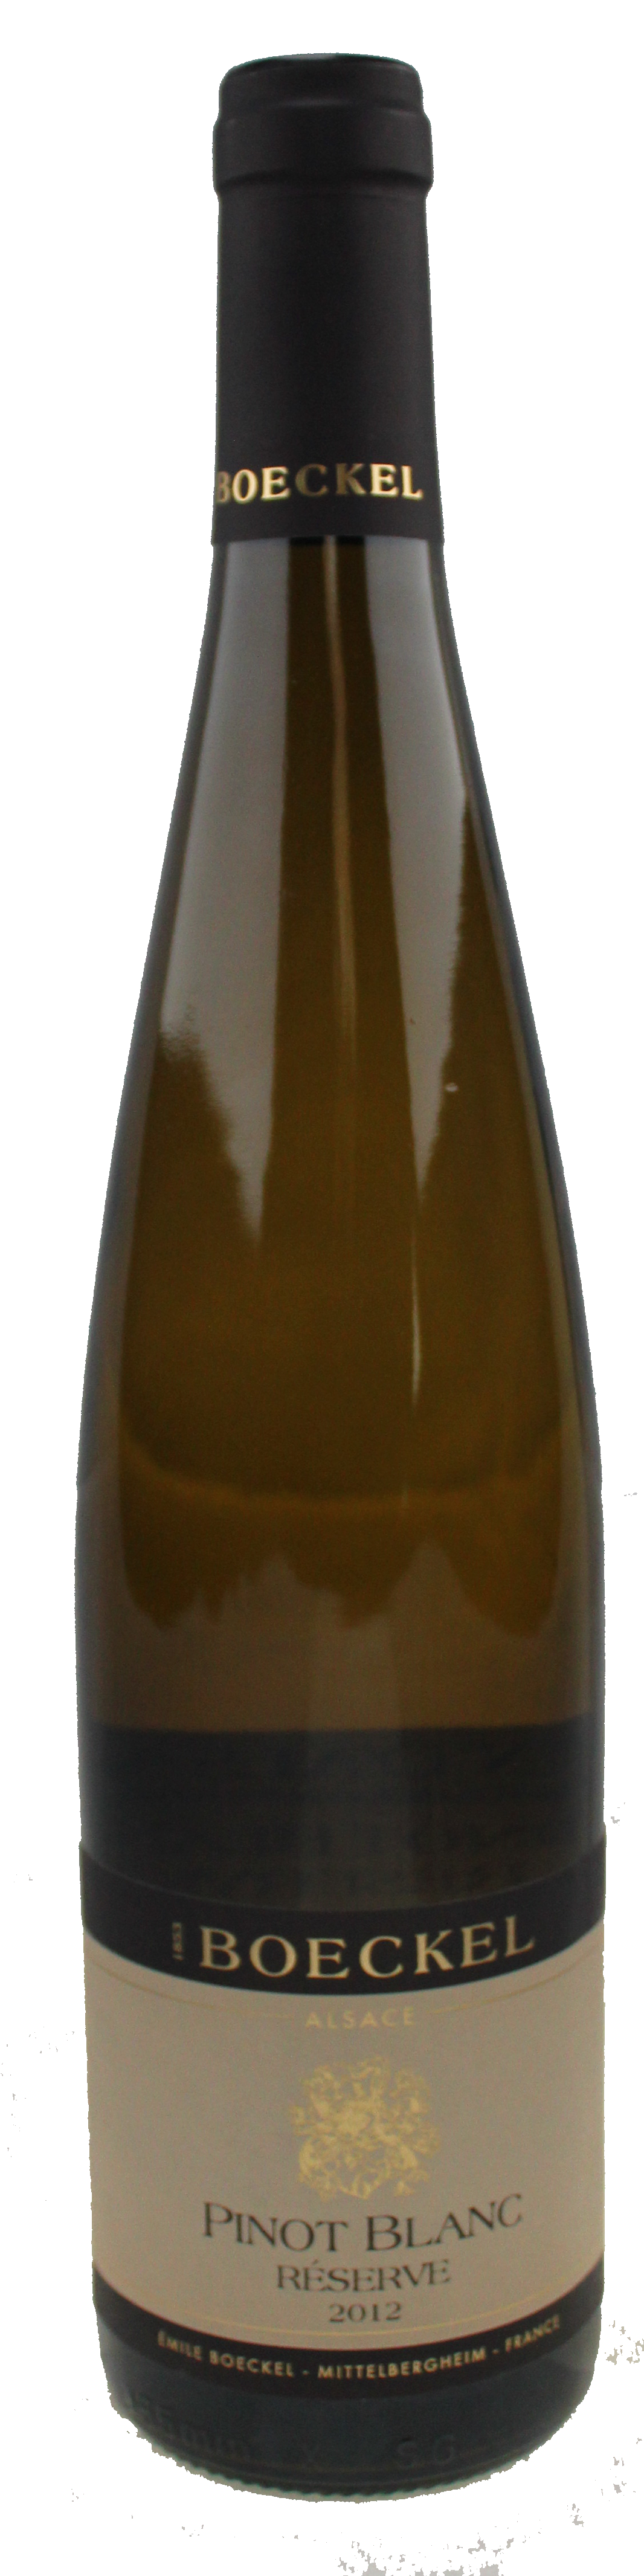 Bottle shot of 2014 Pinot Blanc Reserve